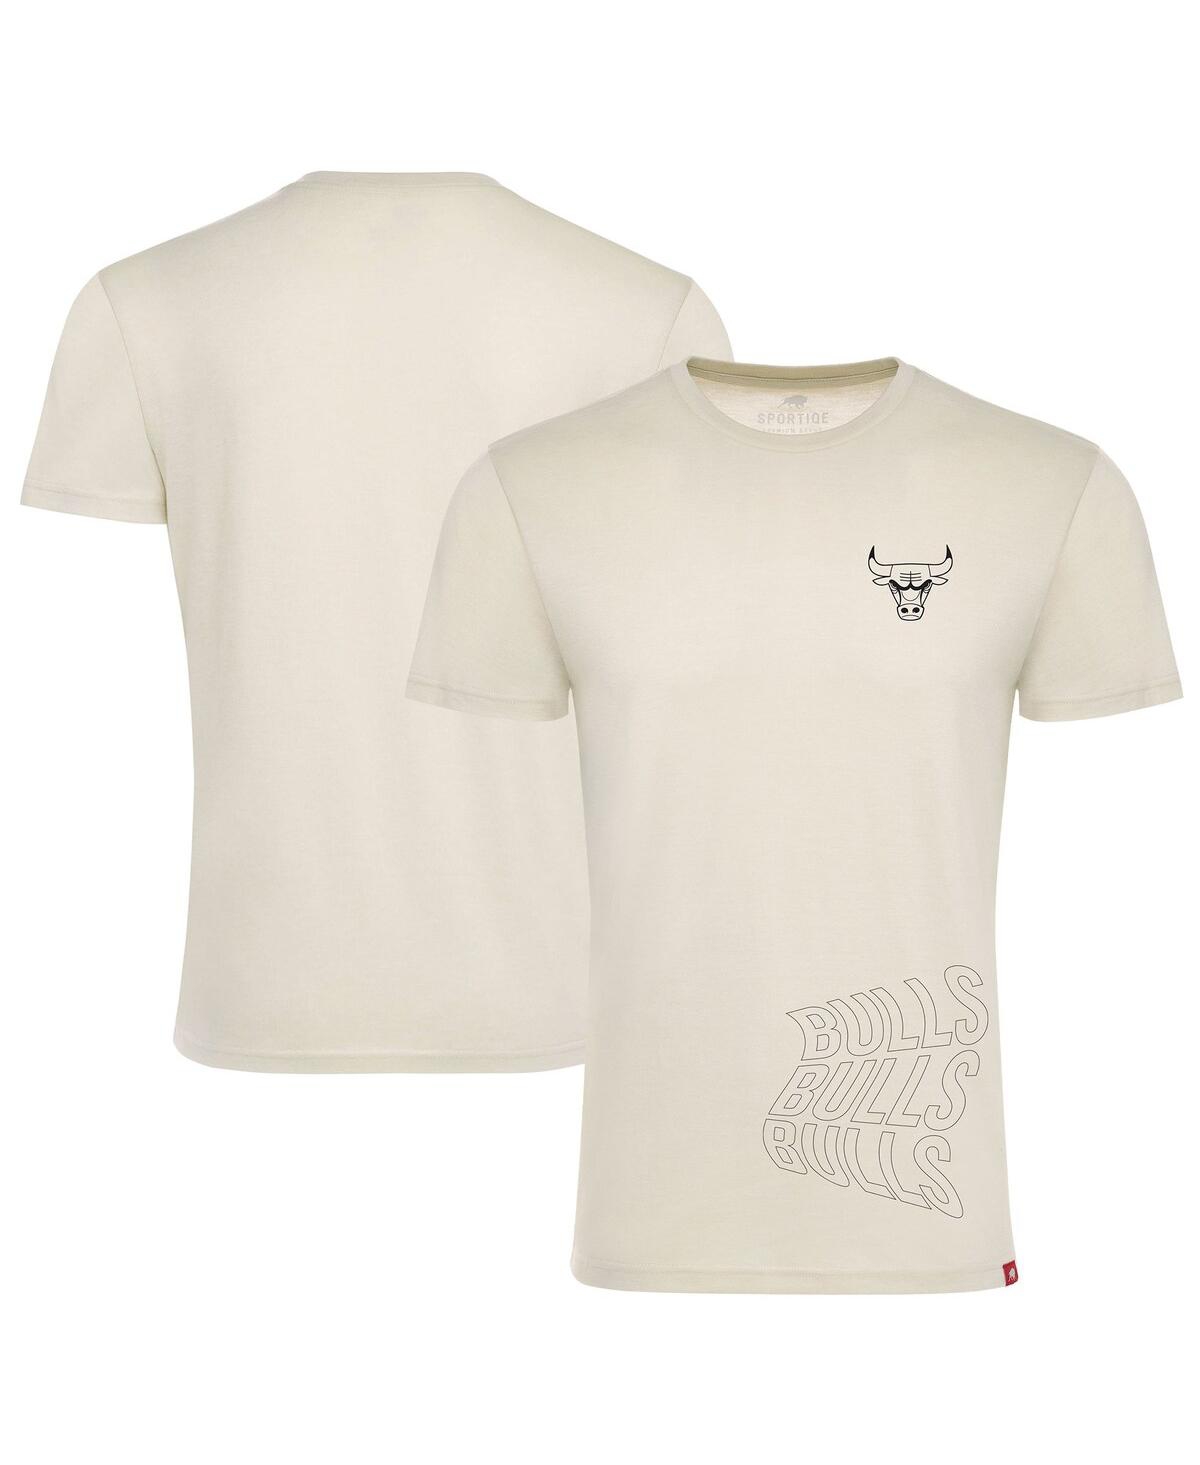 Men's and Women's Sportiqe Cream Chicago Bulls 1966 Collection Comfy Tri-Blend T-shirt - Cream